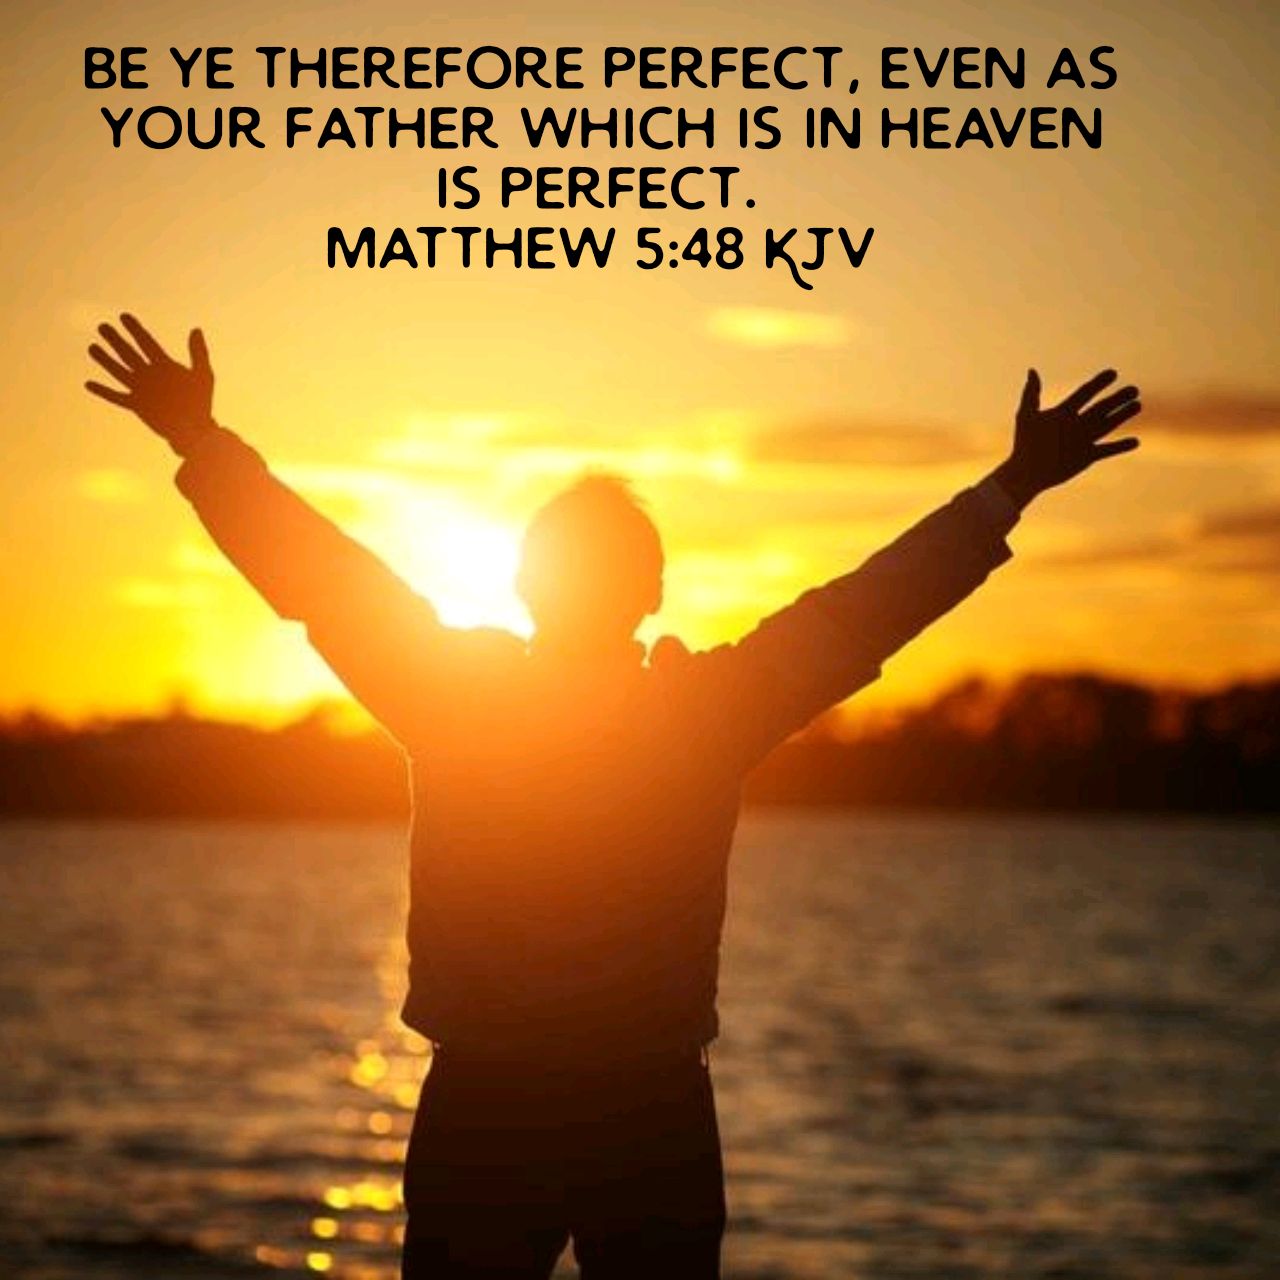 טוויטר \ John kellam בטוויטר: "Be ye therefore perfect, even as your Father  which is in heaven is perfect. Matthew 5:48 KJV https://t.co/sTHZh4krCq  https://t.co/wMUYrcY0xs"